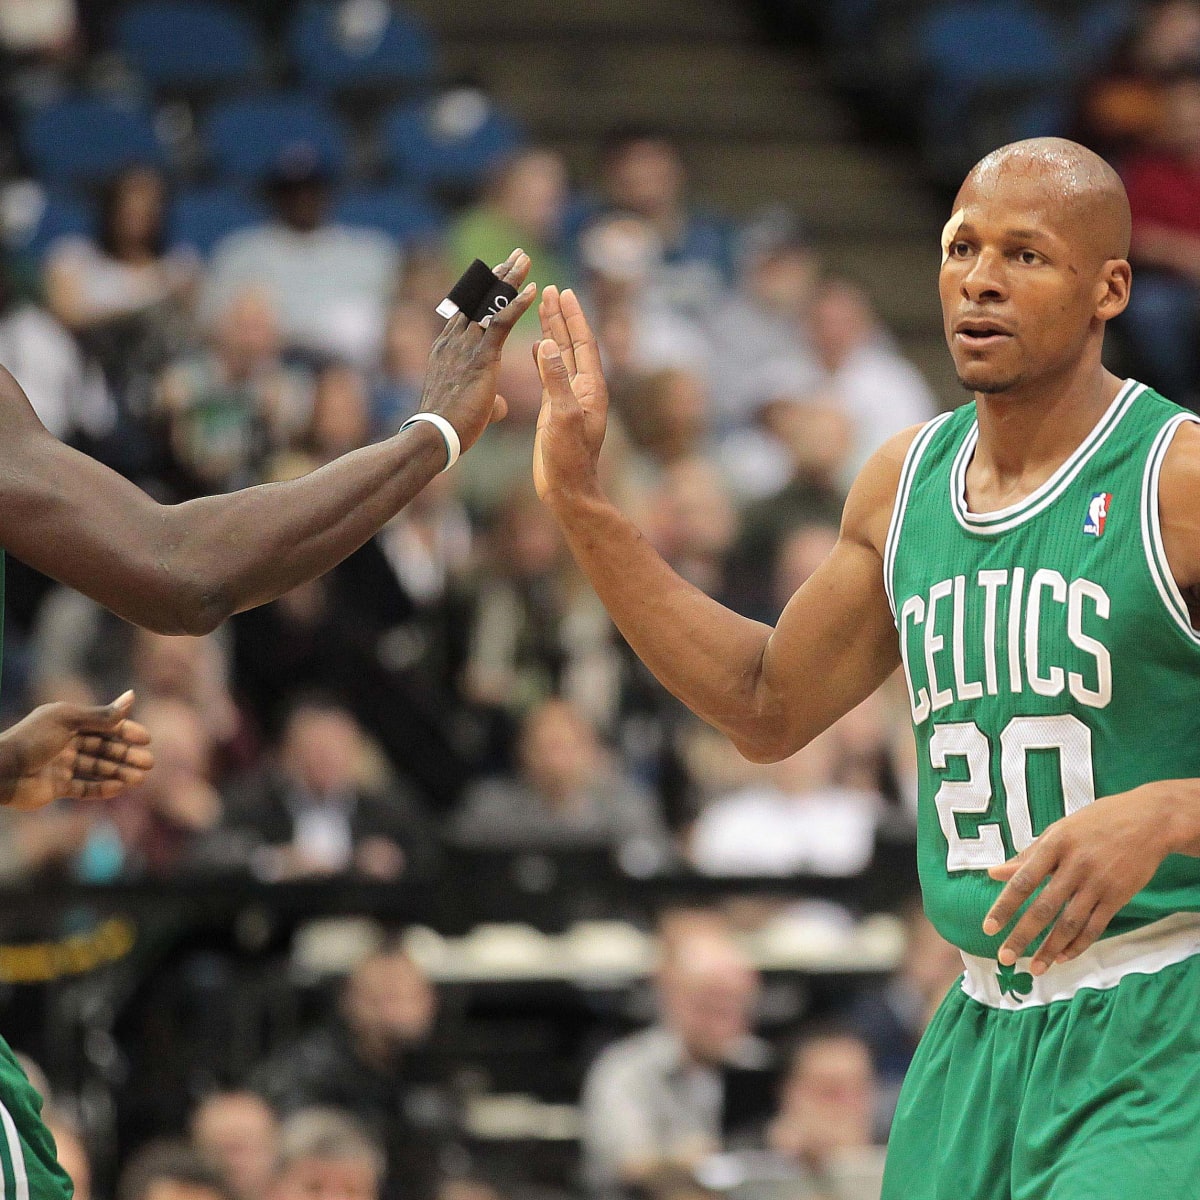 Kevin Garnett has No. 5 jersey retired by Celtics, buries hatchet with  former teammate Ray Allen 